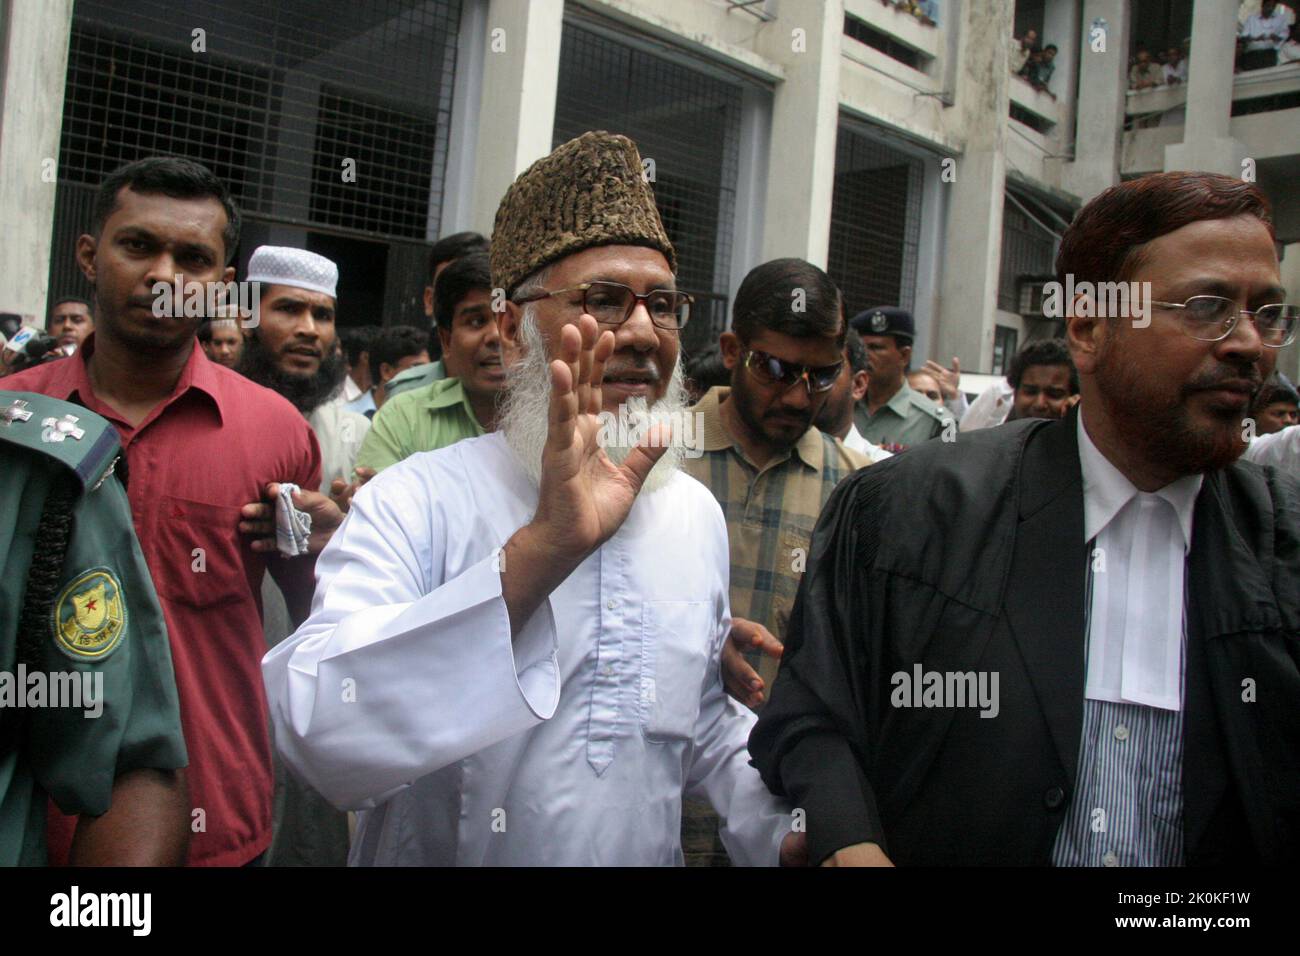 Dhaka, Bangladesh - May 08, 2007: Motiur Rahman Nizami former leader of the Bangladesh Jamaat-e-Islami. He was in 2014 convicted of masterminding the Stock Photo